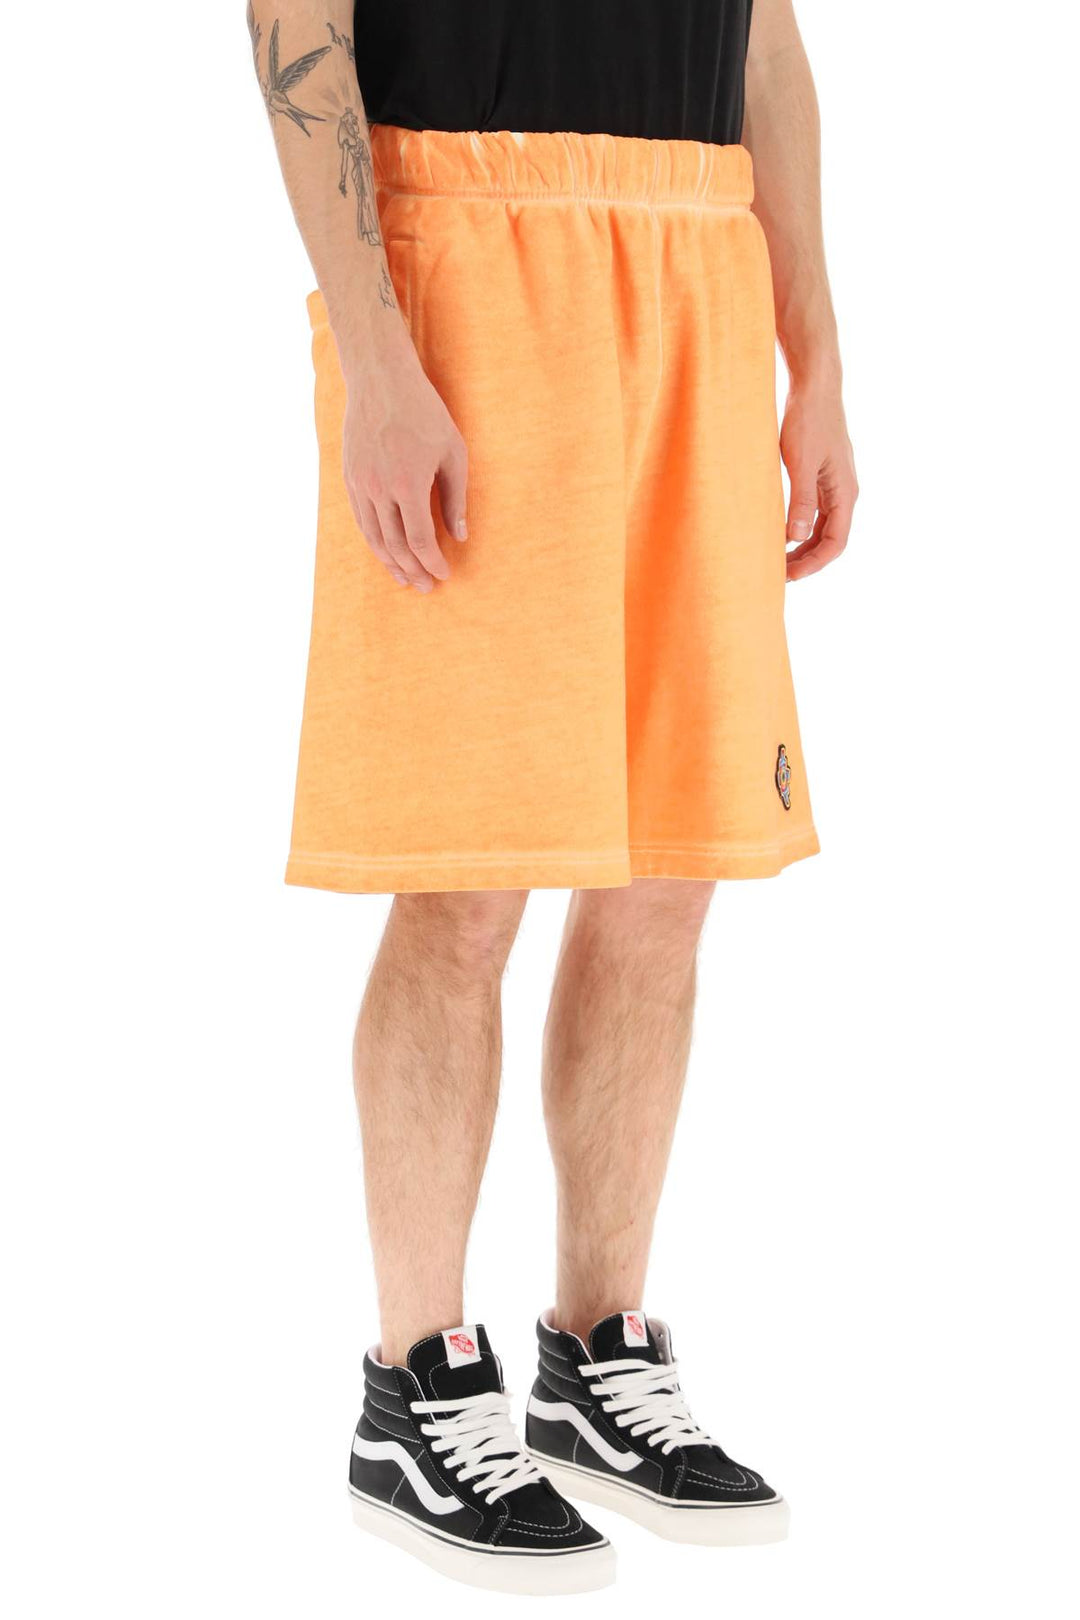 Marcelo Burlon Sunset Cross Shorts   Arancio